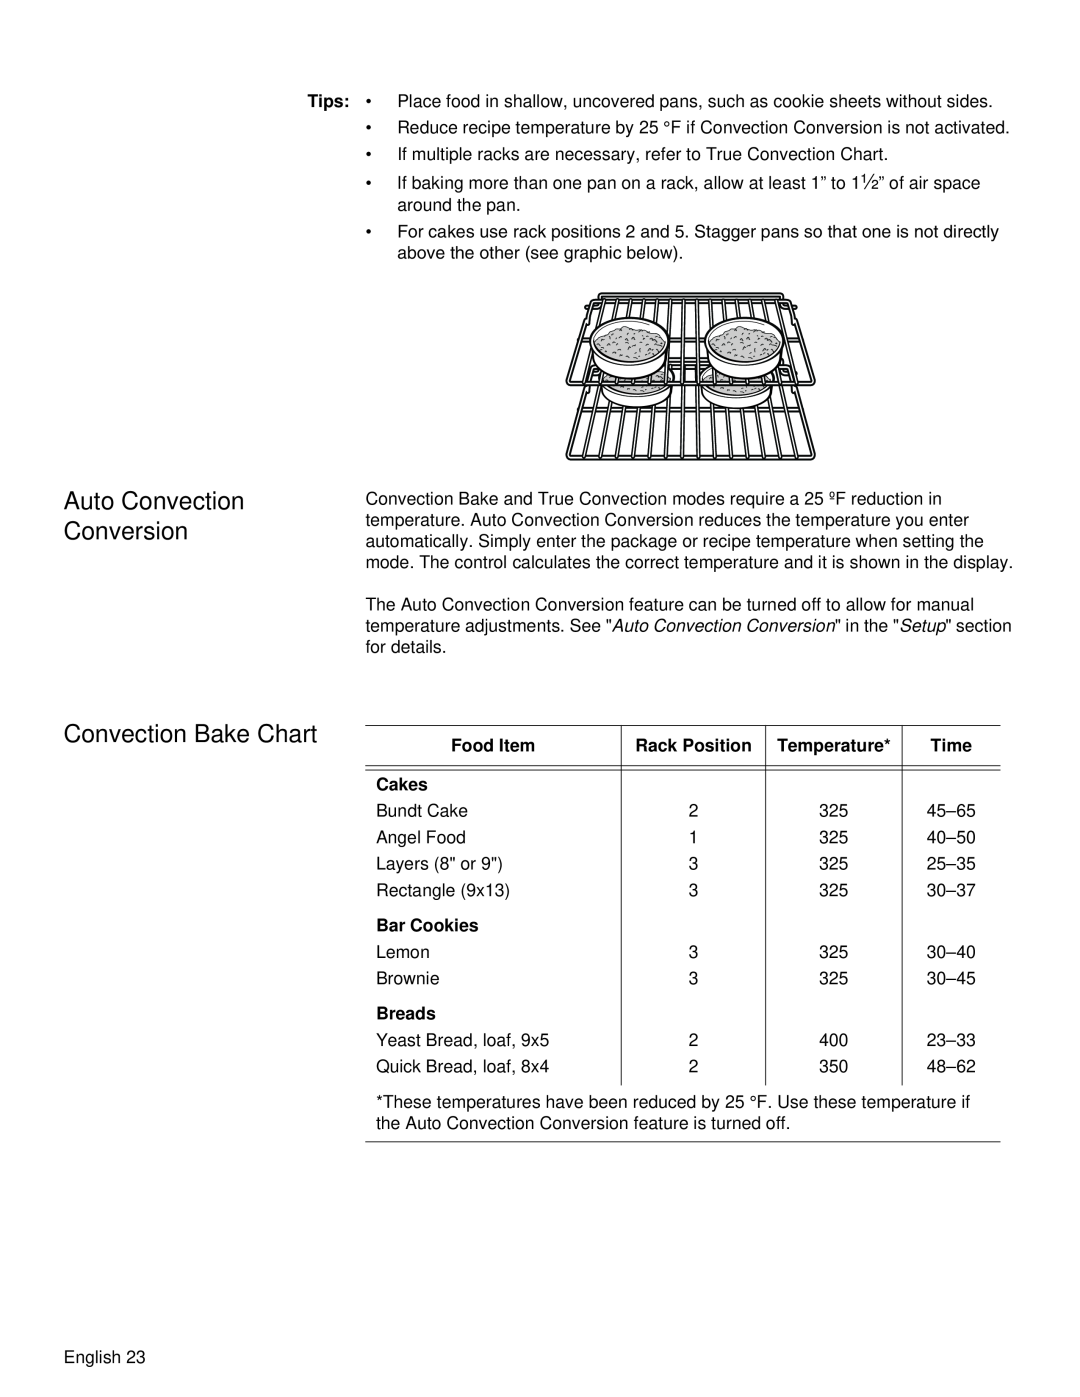 Siemens HB30D51UC Auto Convection Conversion, Convection Bake Chart, Food Item, Rack Position, Temperature, Time, Cakes 